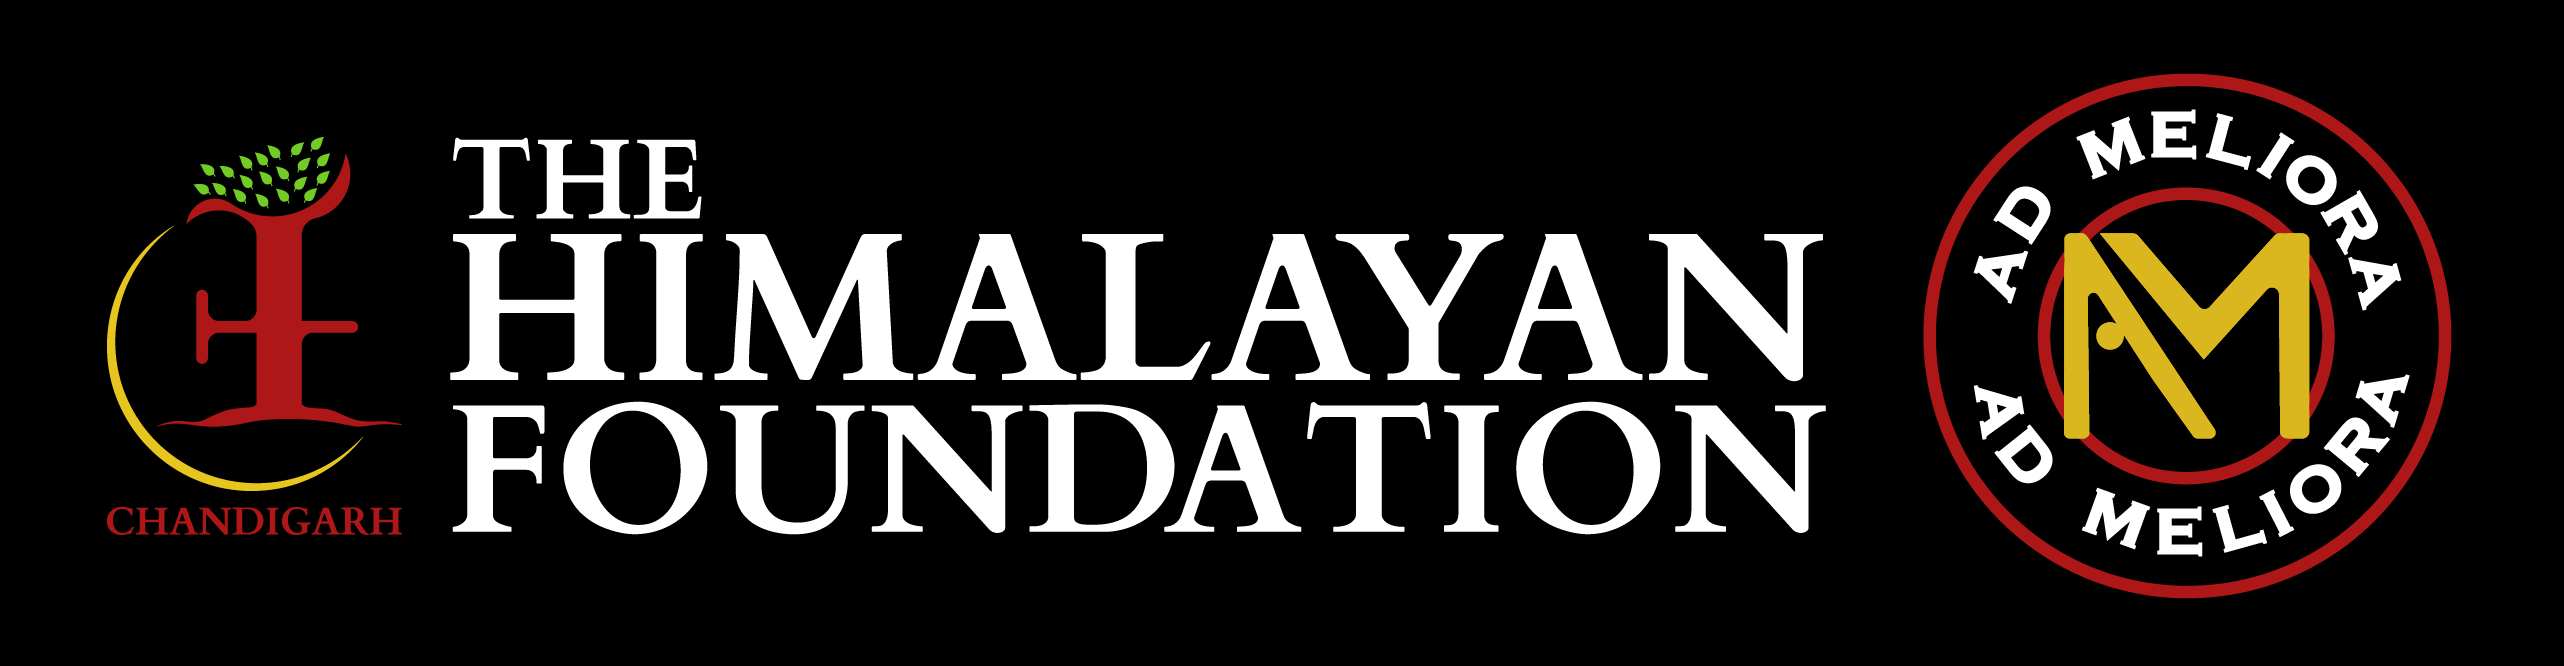 The Himalayan Foundation Chandigarh